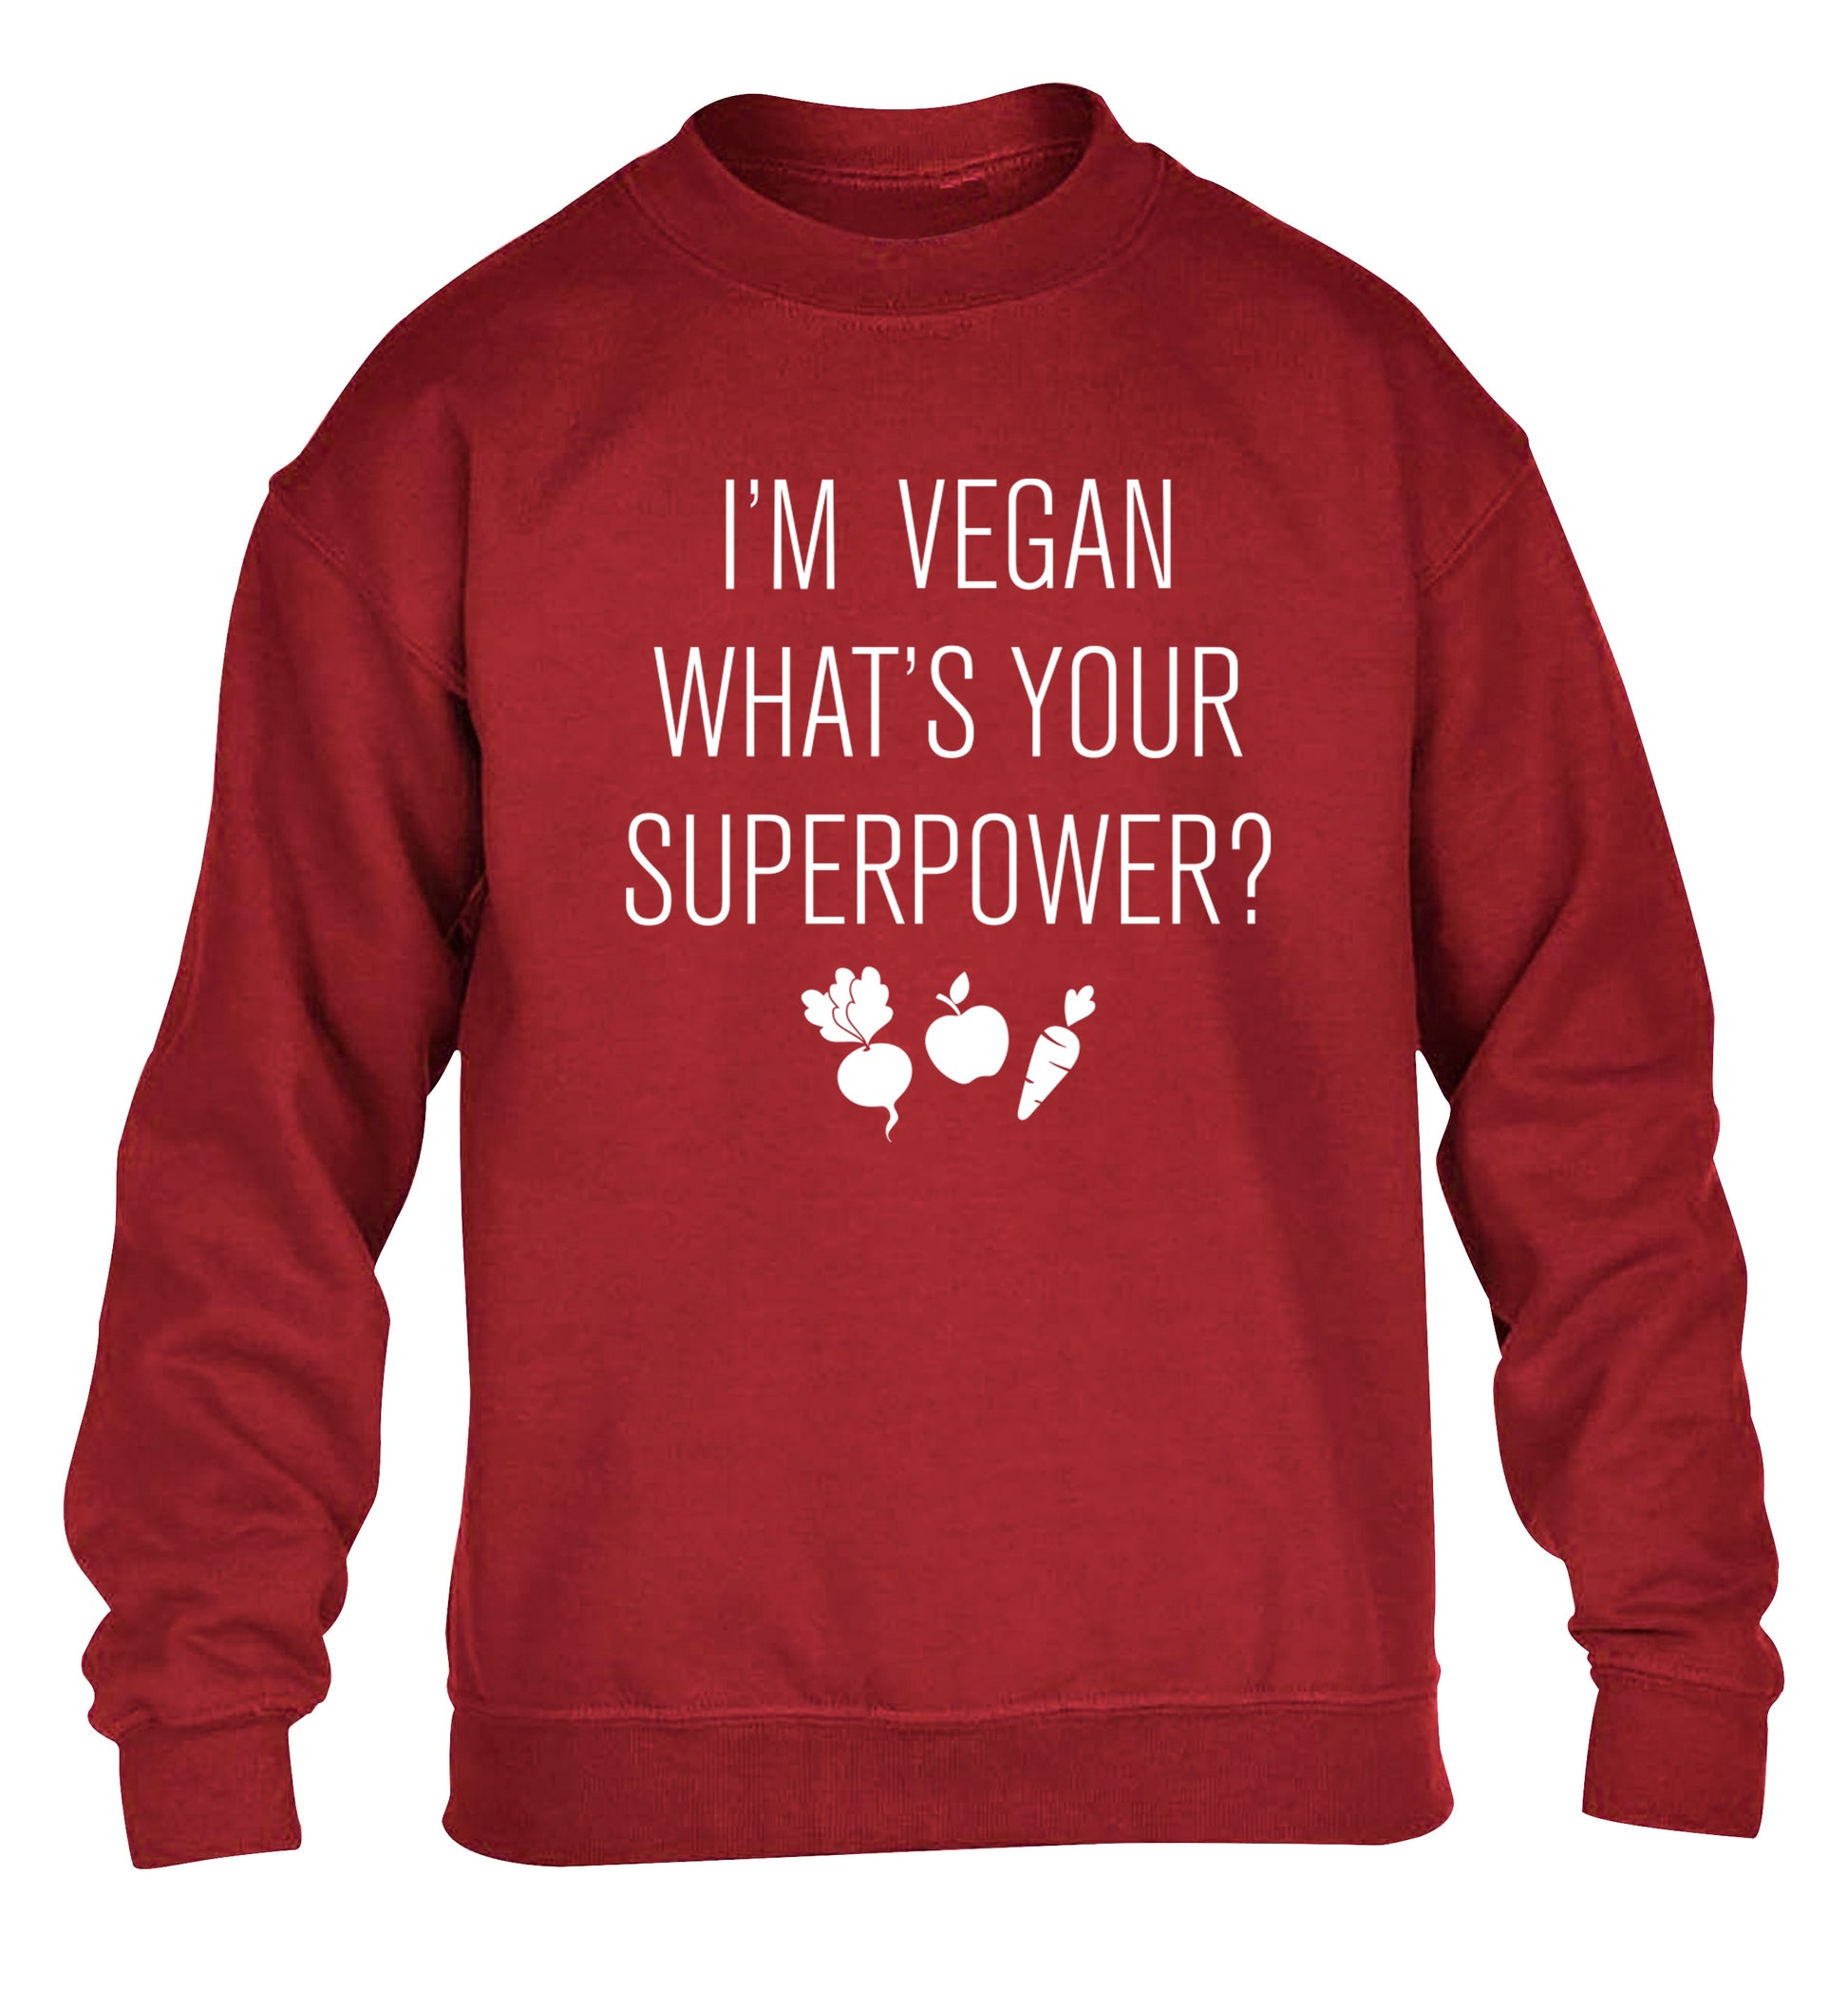 I'm Vegan What's Your Superpower? children's grey sweater 12-13 Years